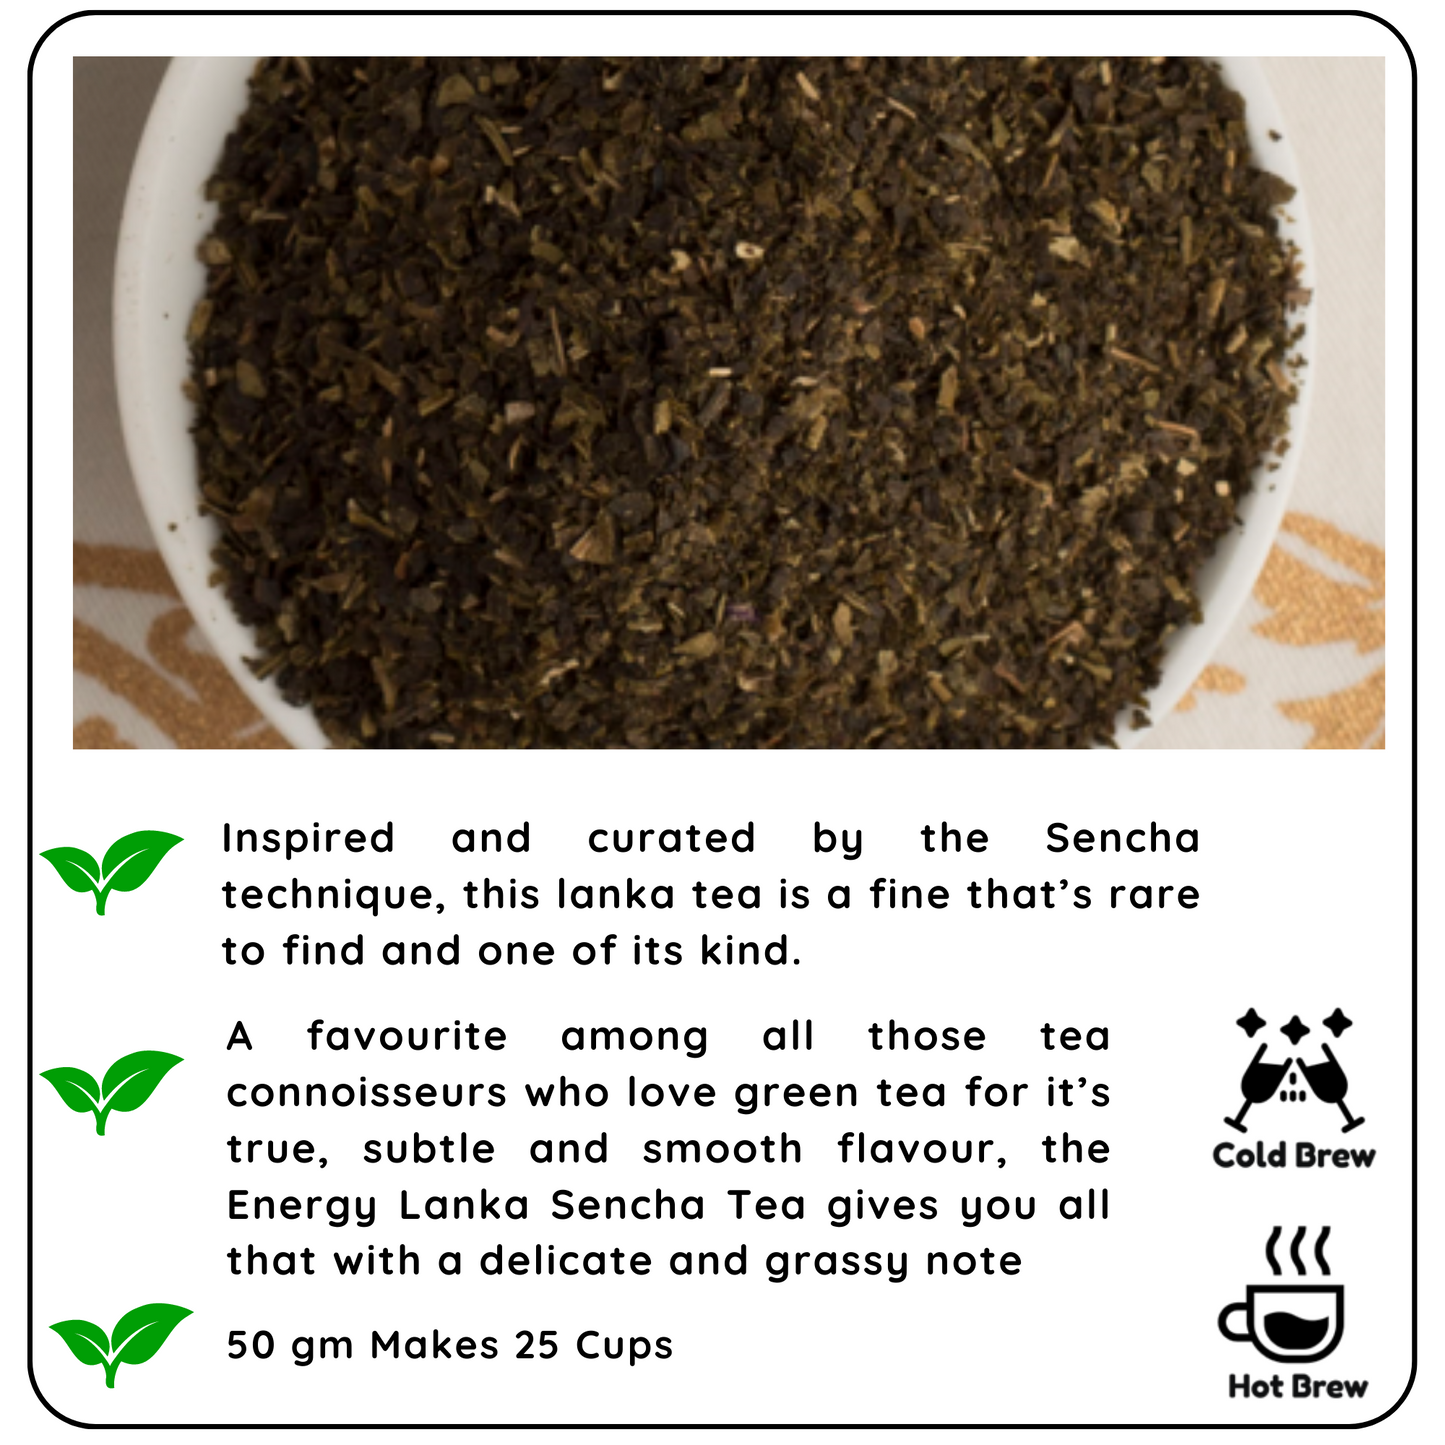 ENERGY Lanka Sencha Tea - A Tea That's Fresh and Zesty - Radhikas Fine Teas and Whatnots